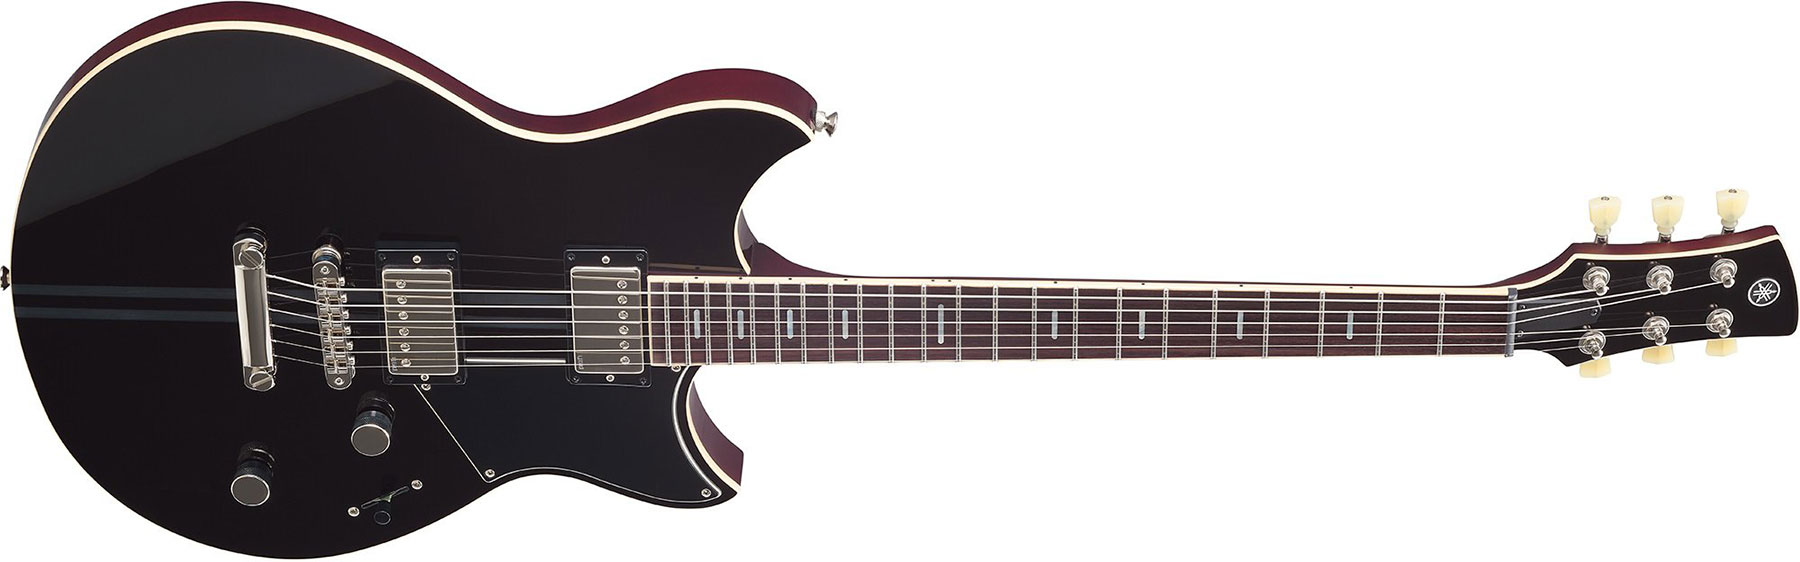 Yamaha Rss20 Revstar Standard Hh Ht Rw - Black - Double Cut E-Gitarre - Variation 1